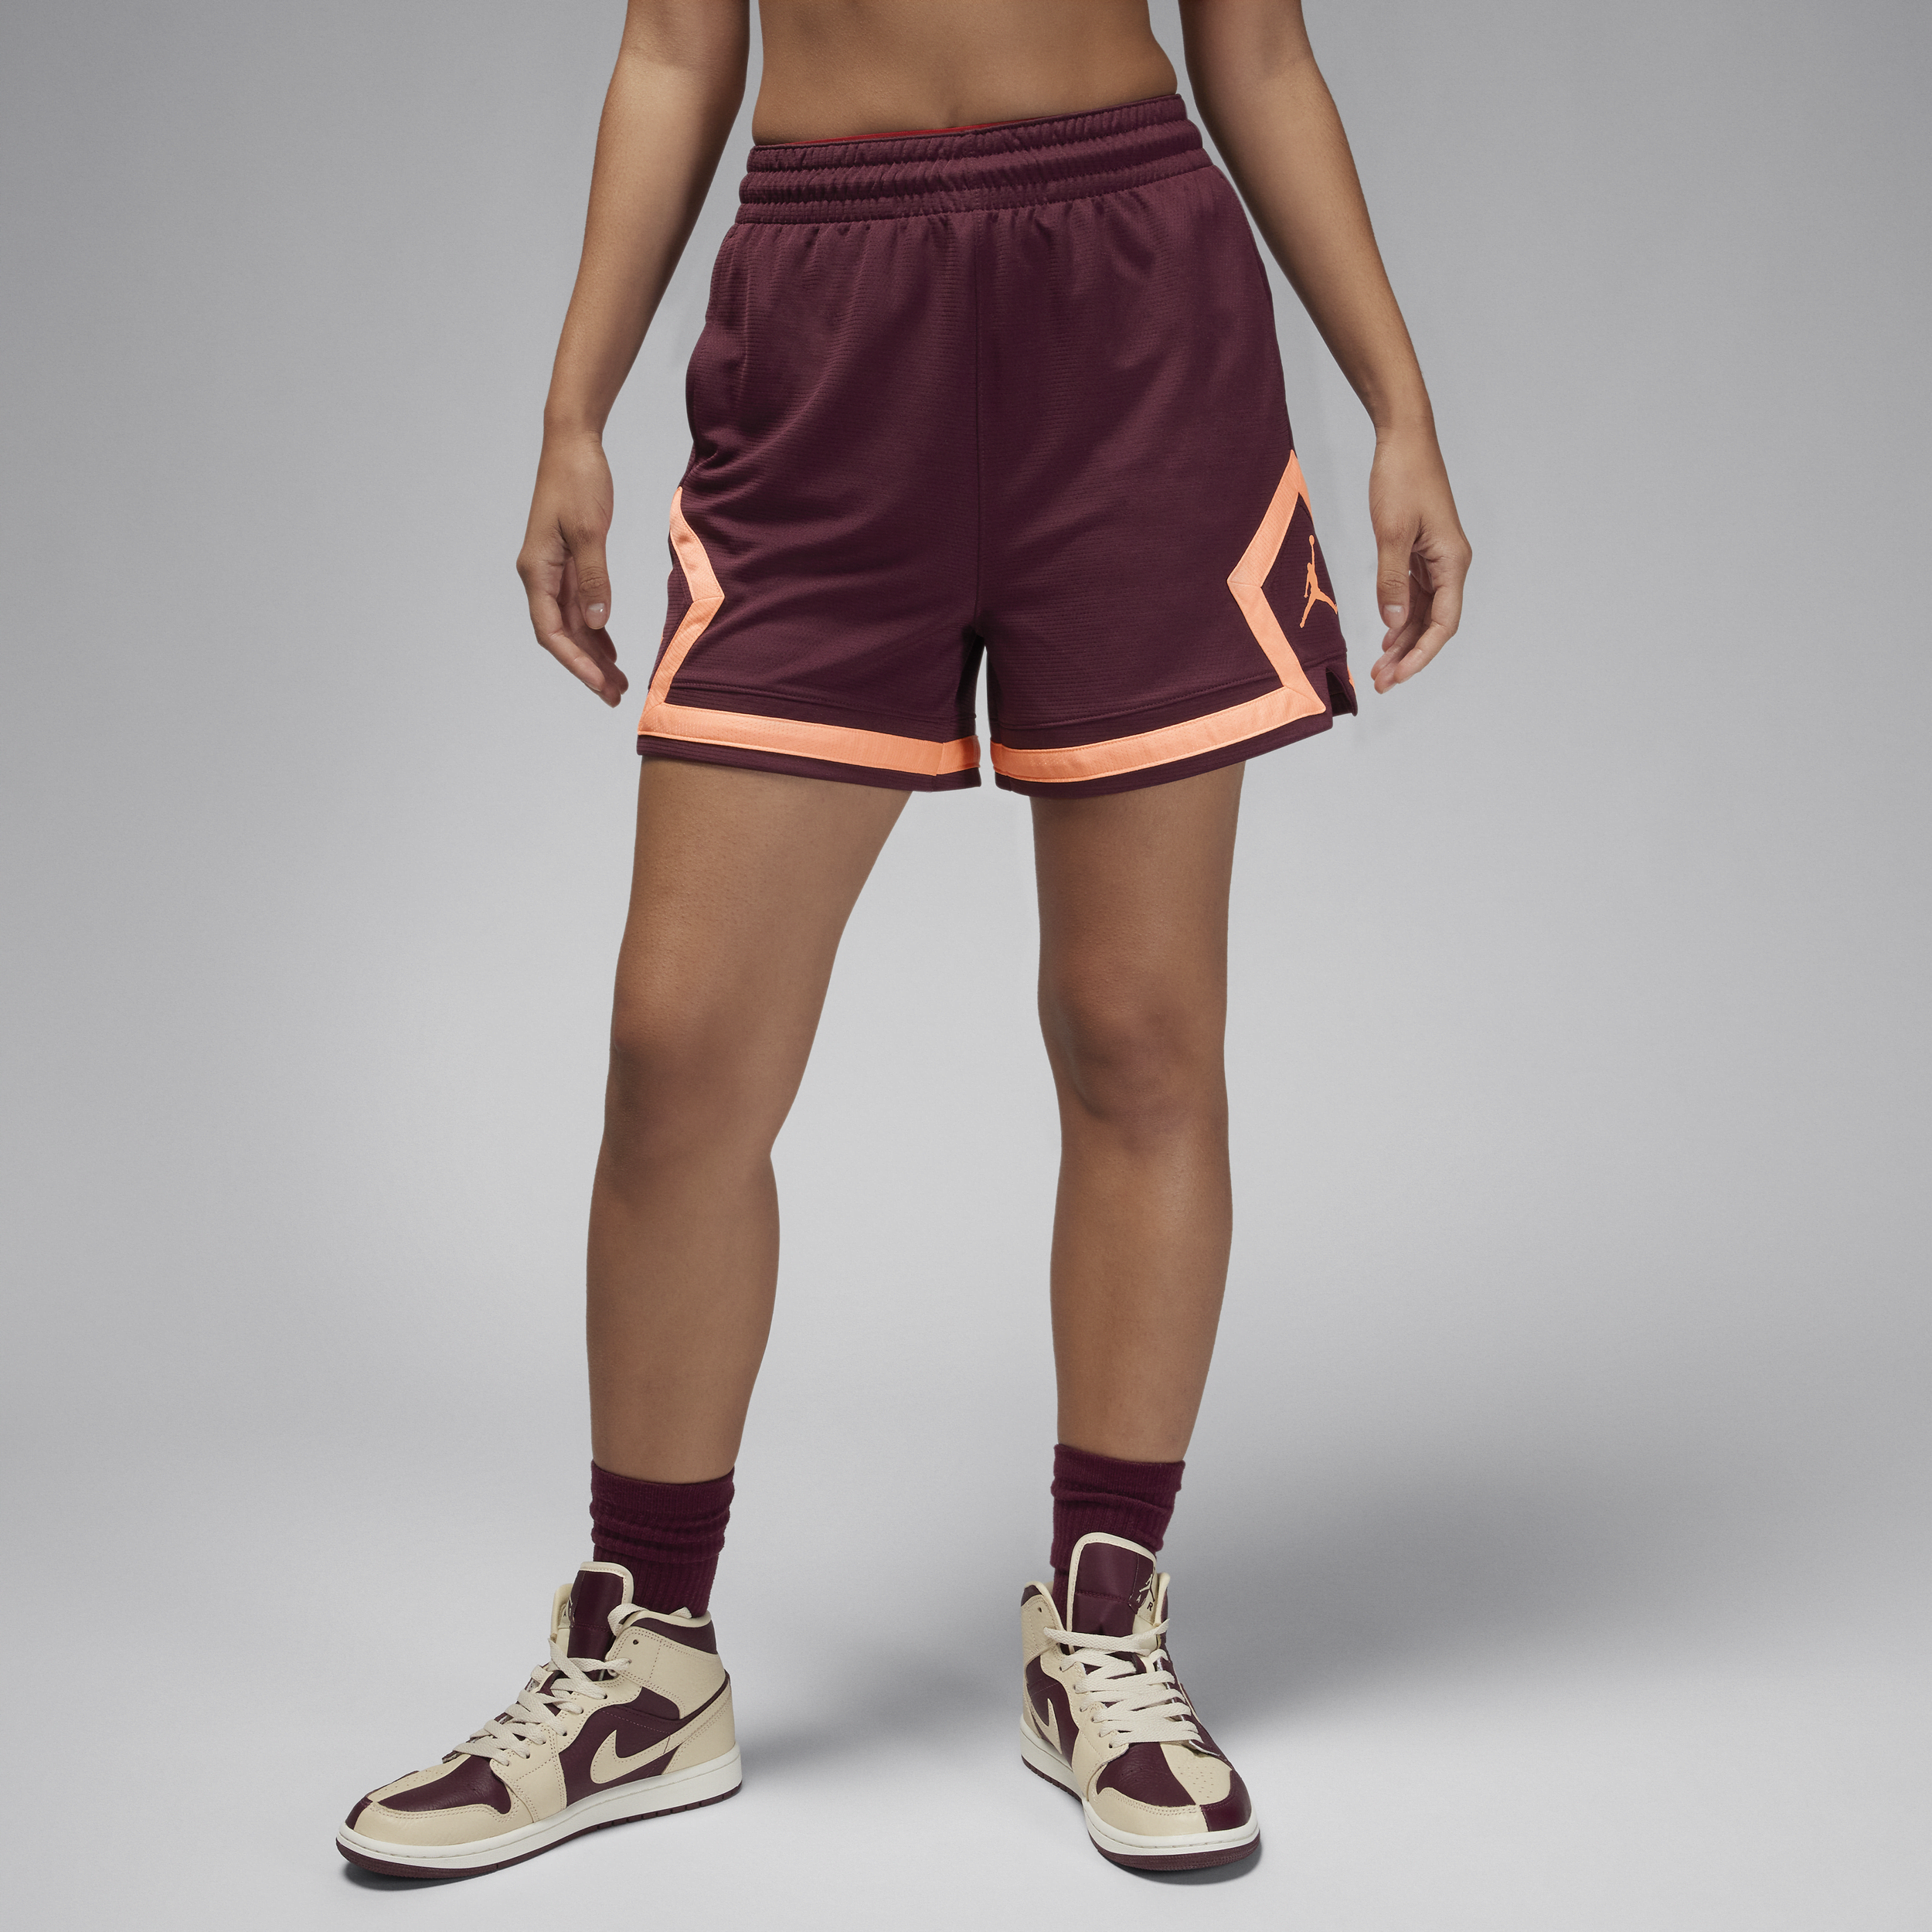 Nike Shorts Diamond 10 cm Jordan Sport – Donna - Rosso